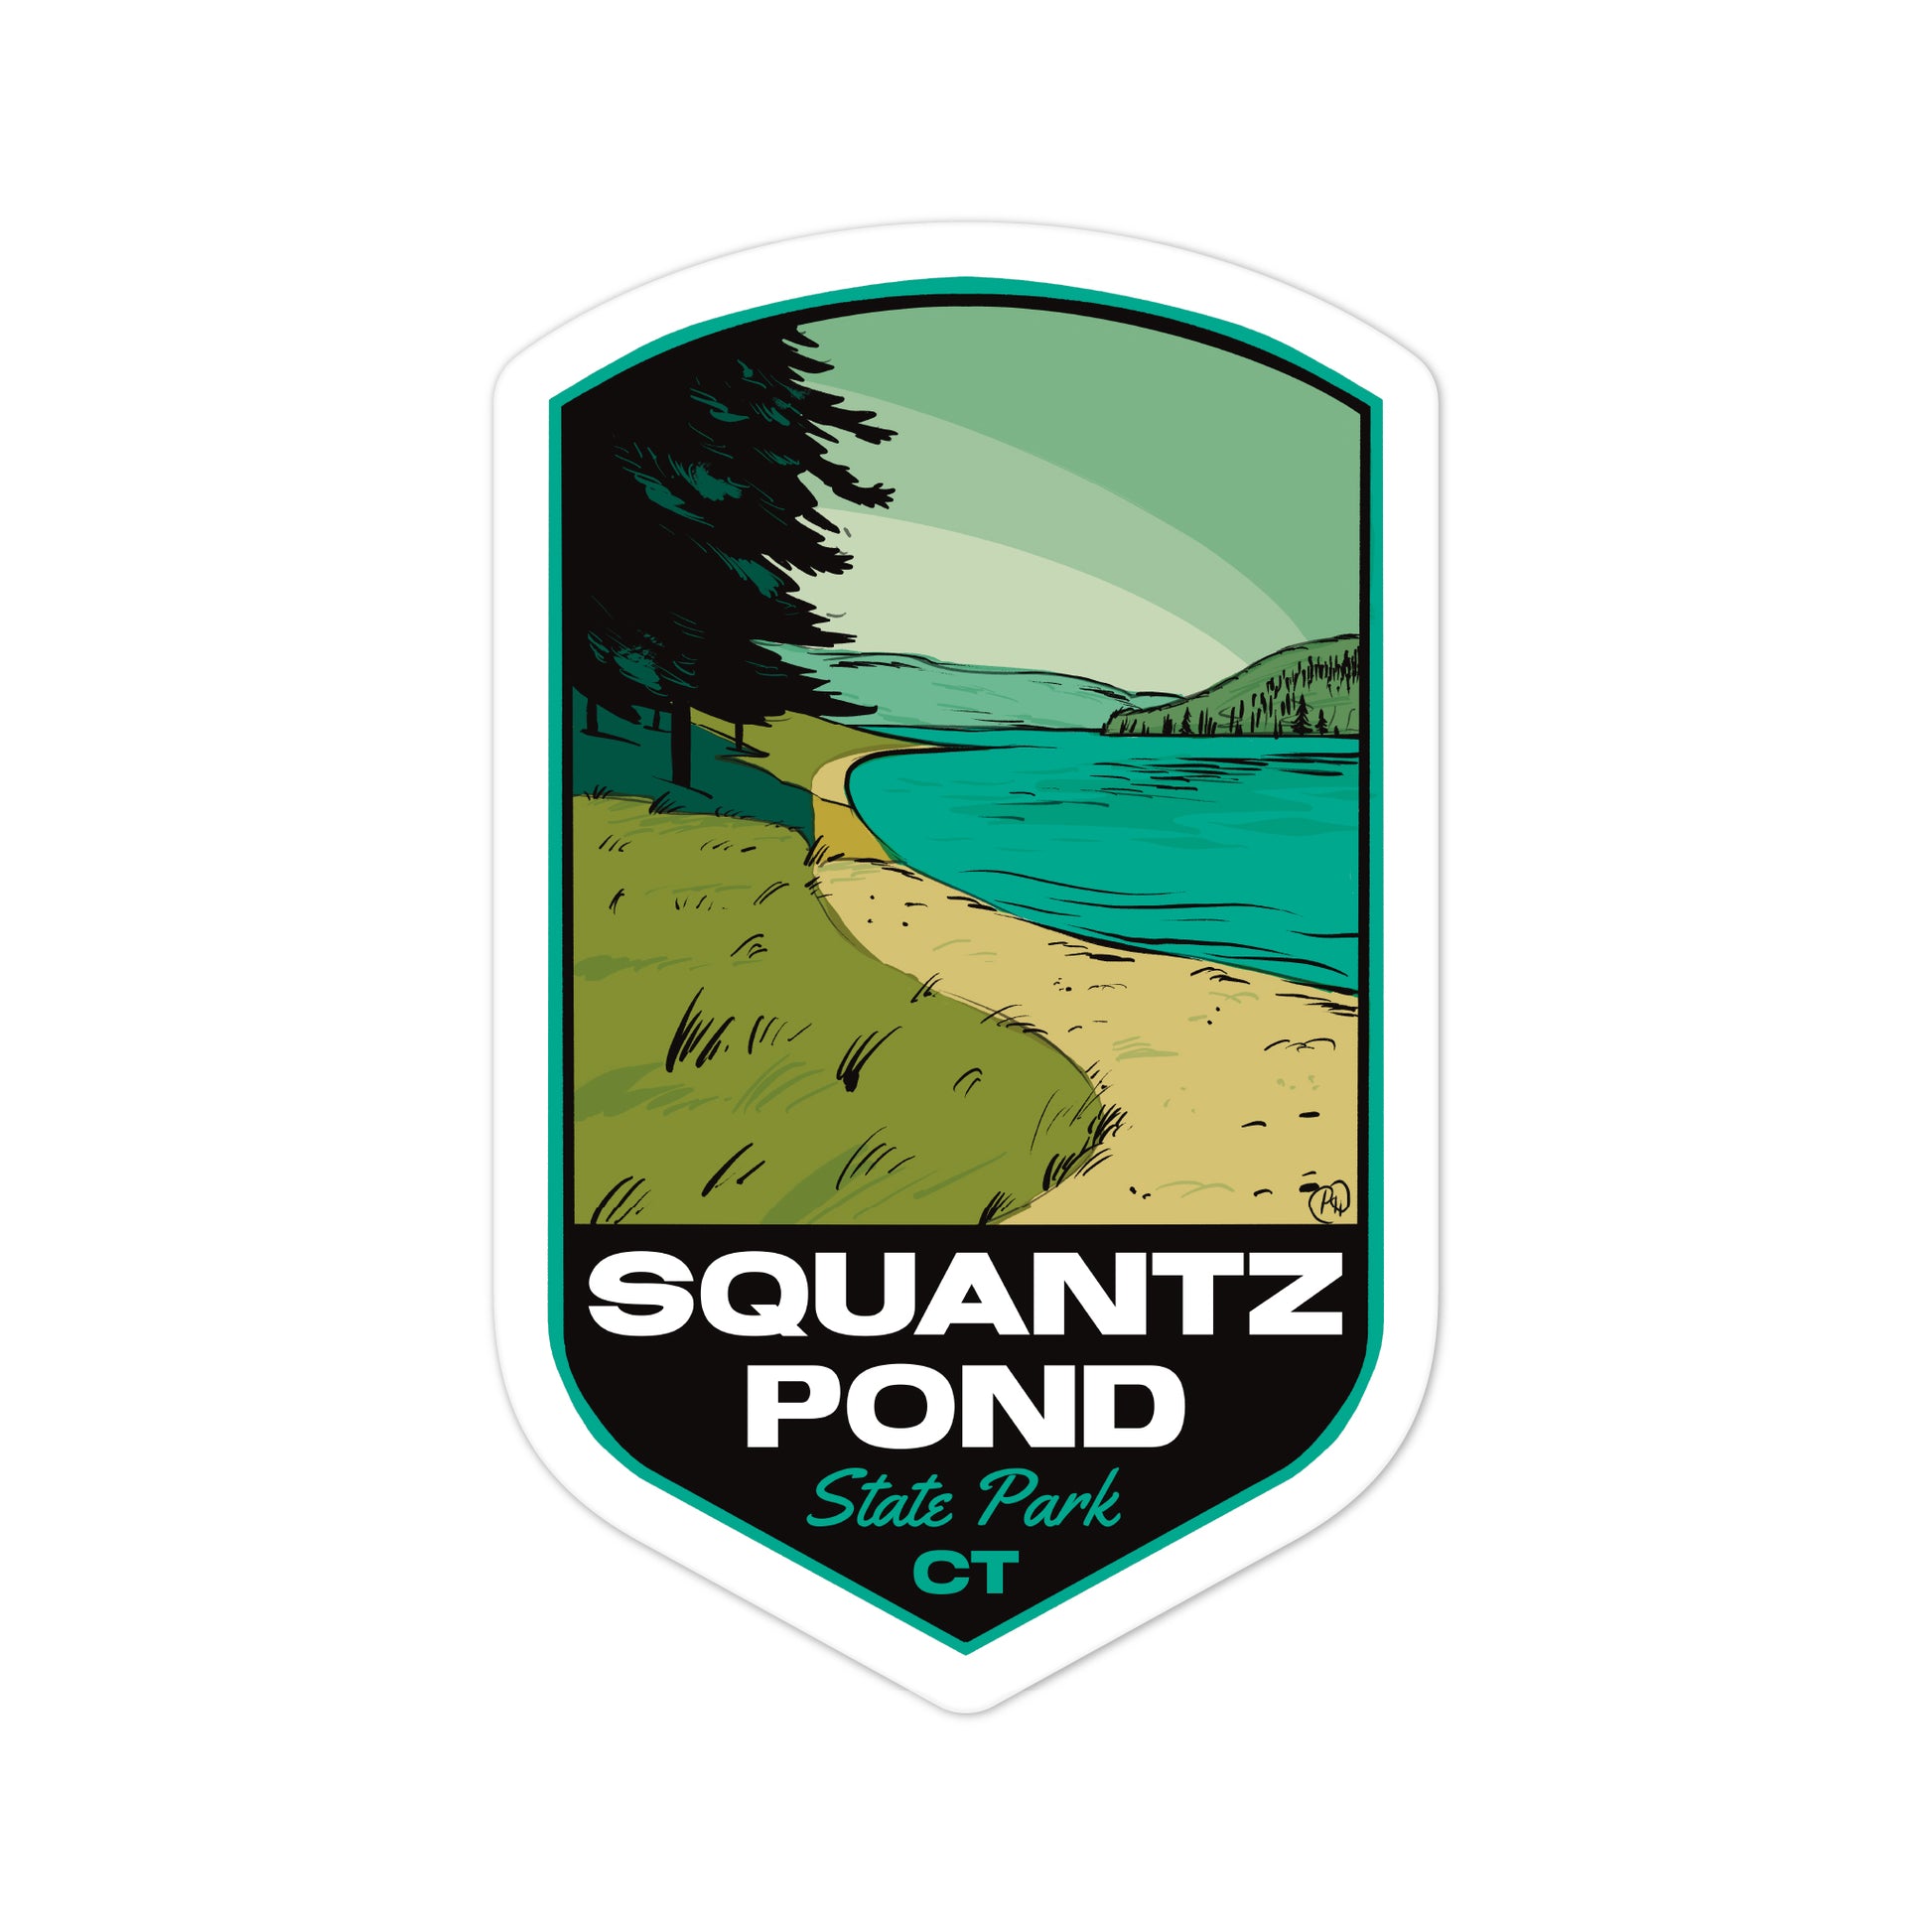 A sticker of Squantz Pond State Park